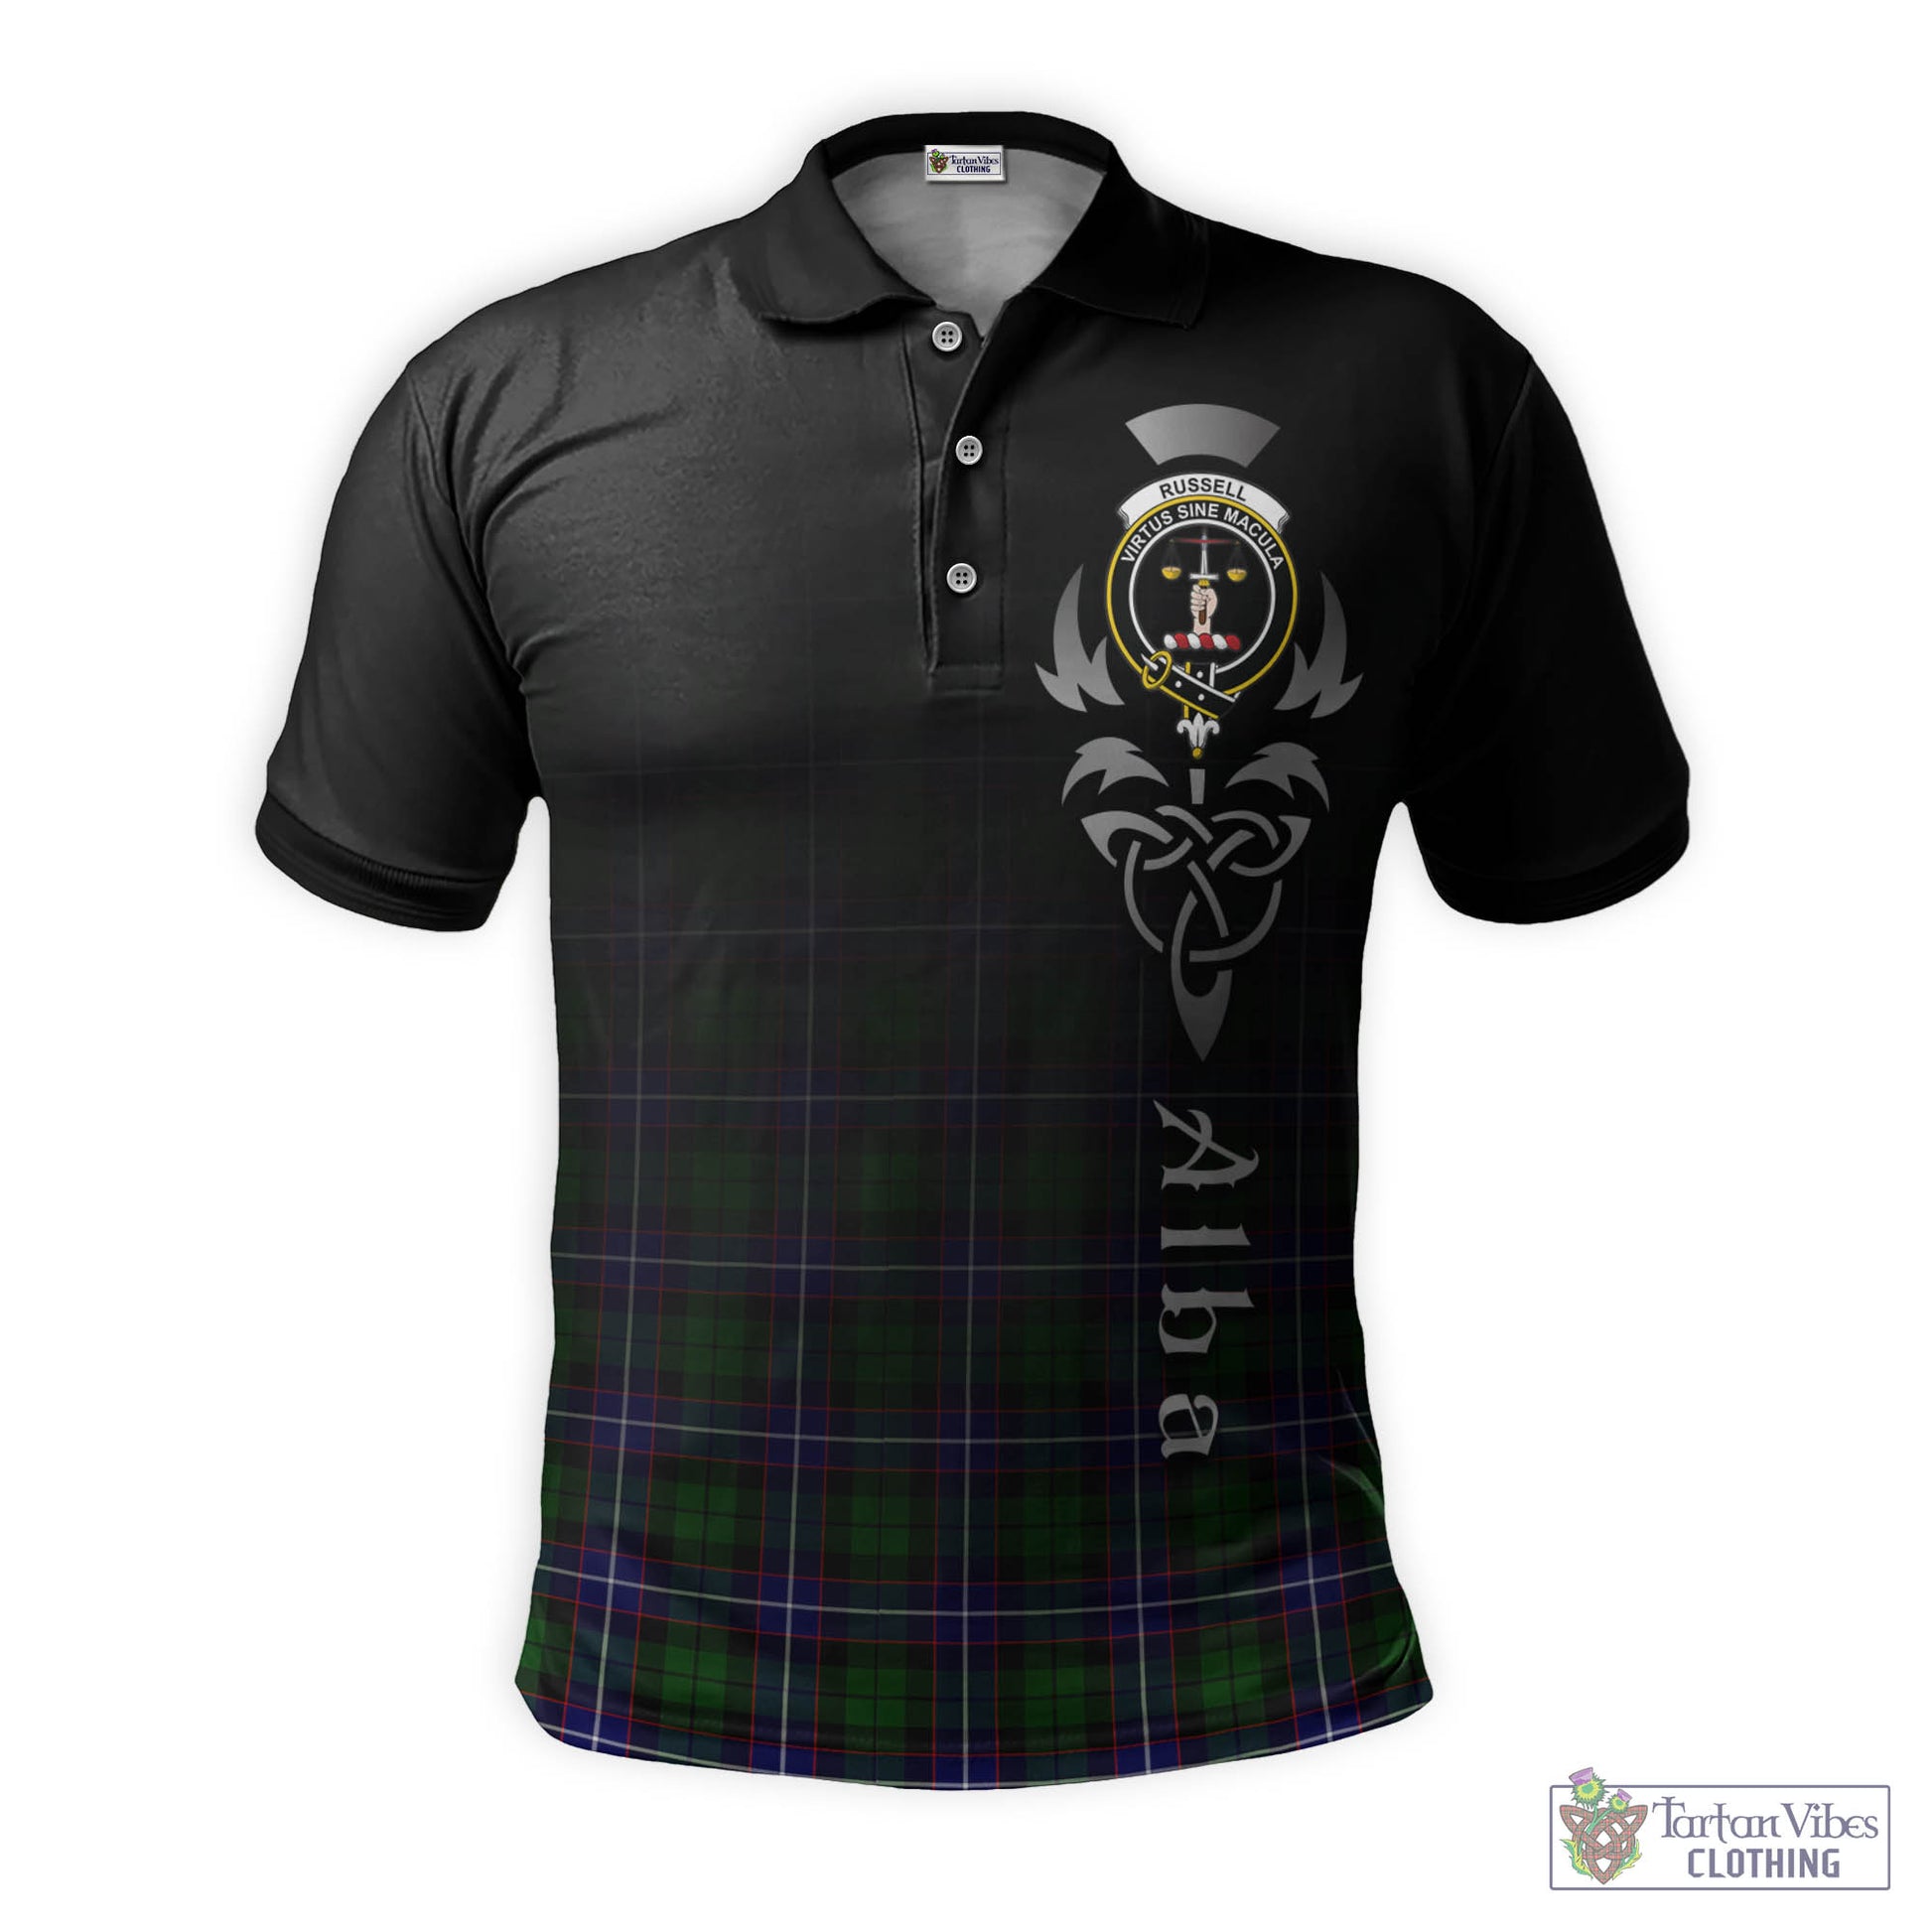 Tartan Vibes Clothing Russell Modern Tartan Polo Shirt Featuring Alba Gu Brath Family Crest Celtic Inspired